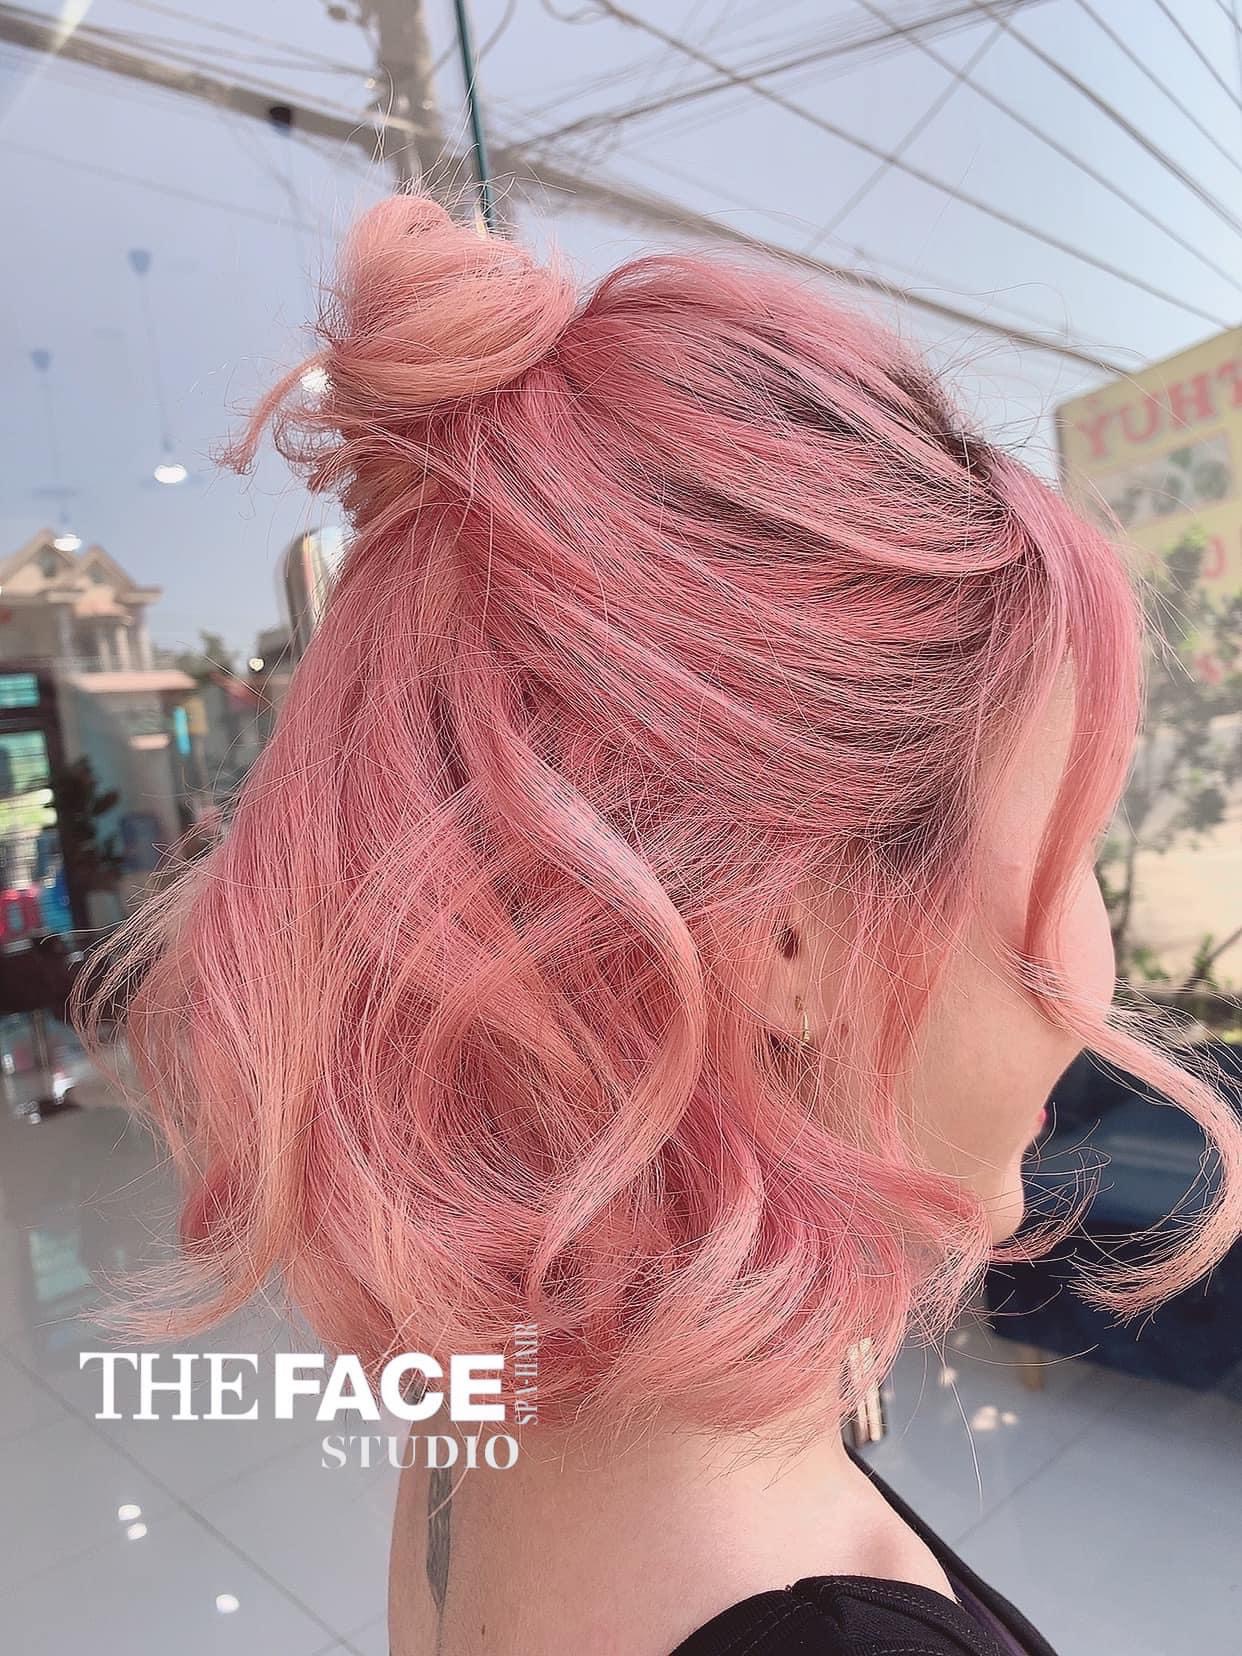 Nhuộm tóc màu hồng phấn  Khuong Minh Hair Salon  Facebook